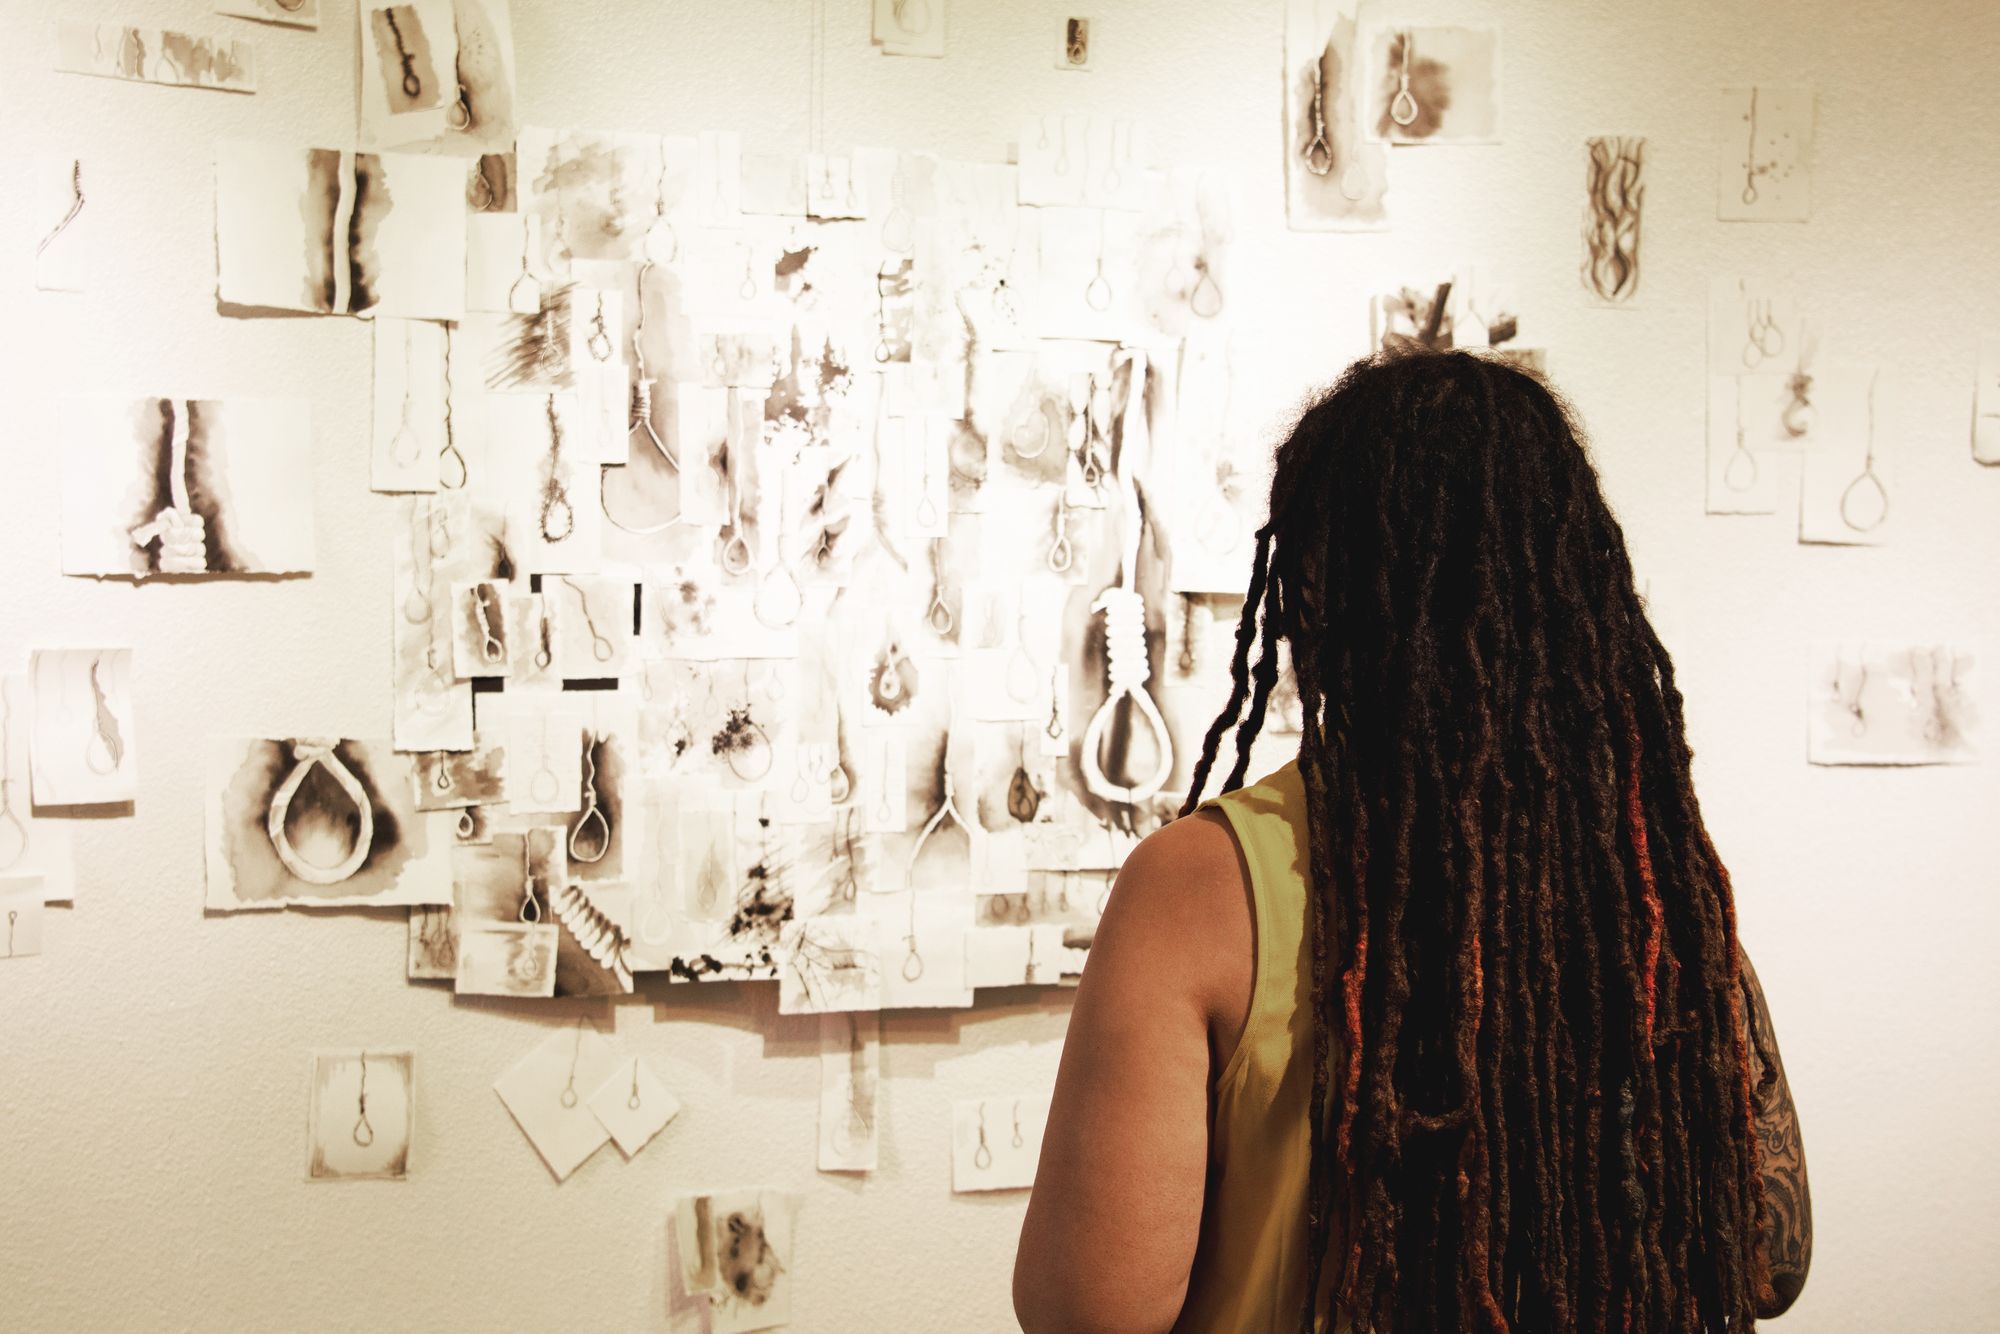 ‘Make it Plain’: An art exhibition designed to encourage dialogue about race